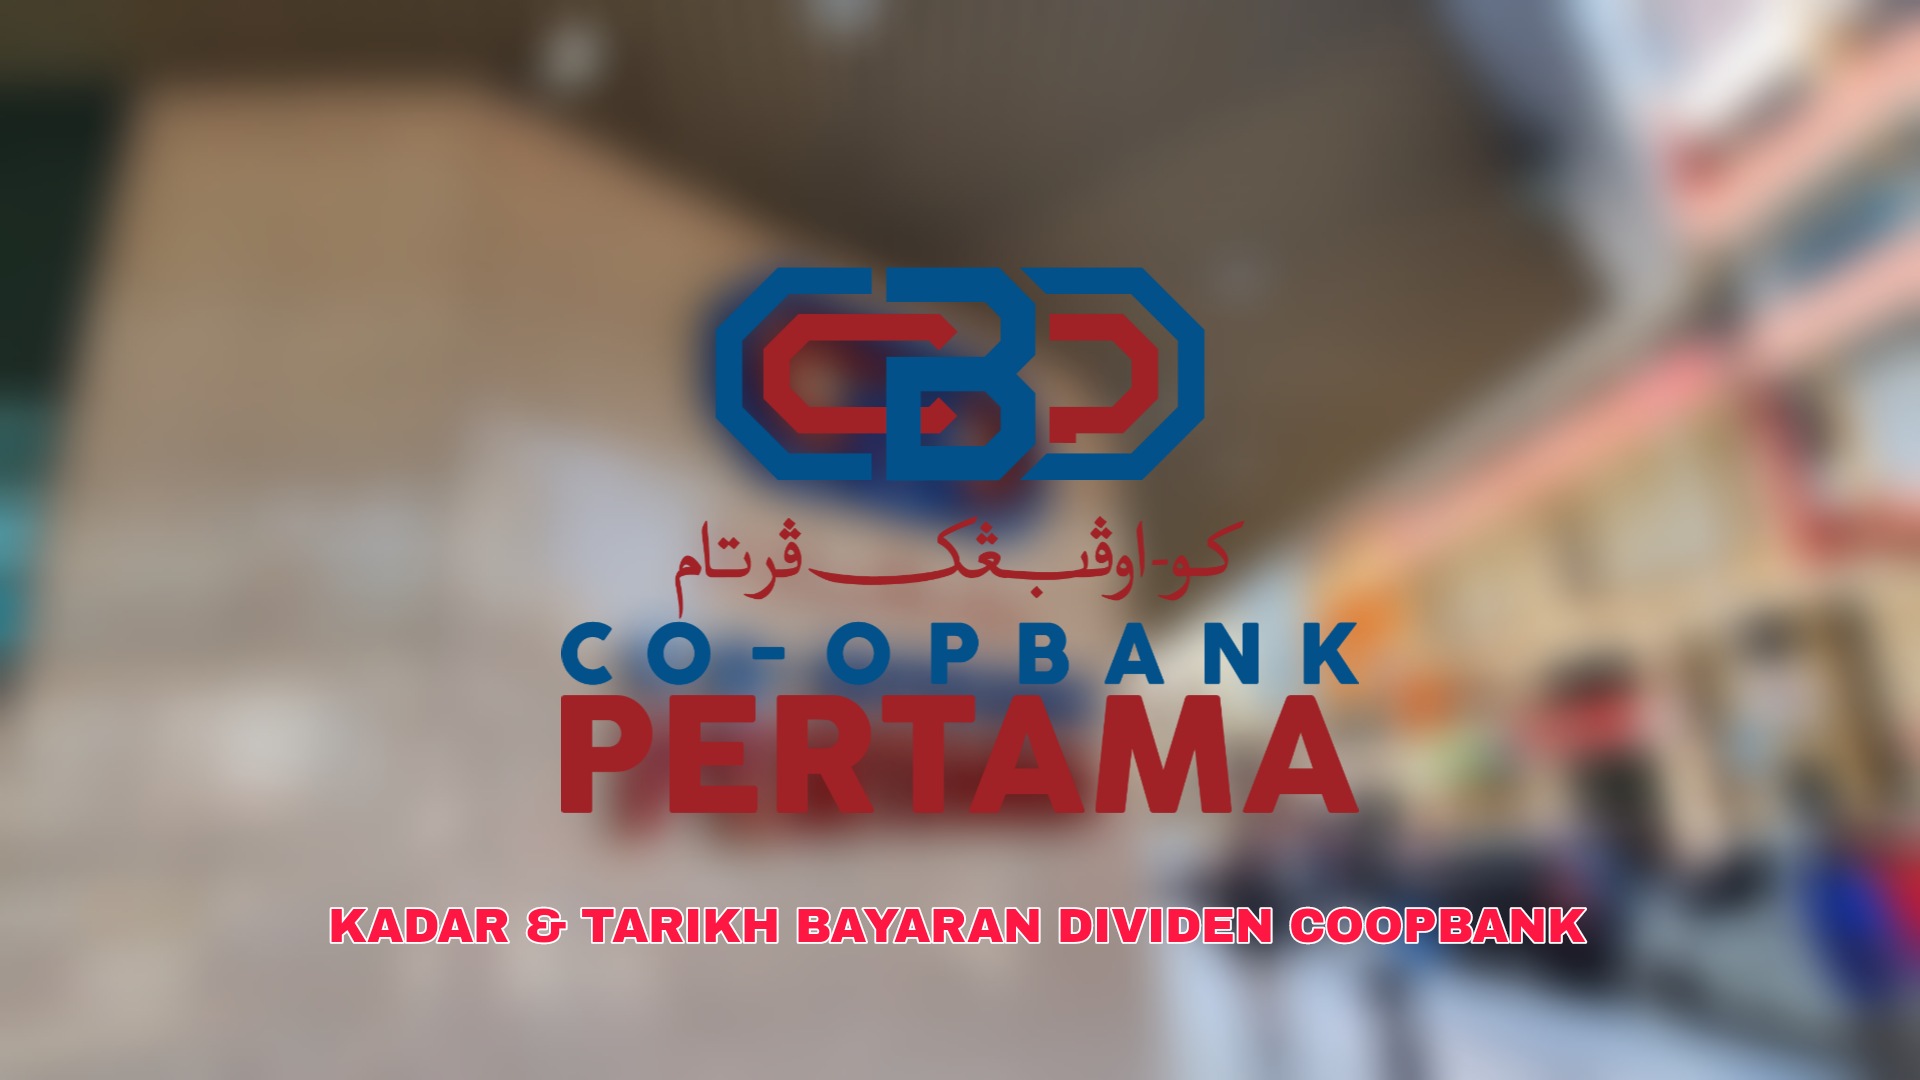 Kadar & Tarikh Bayaran Dividen Coopbank 2022/2023 (CBP)